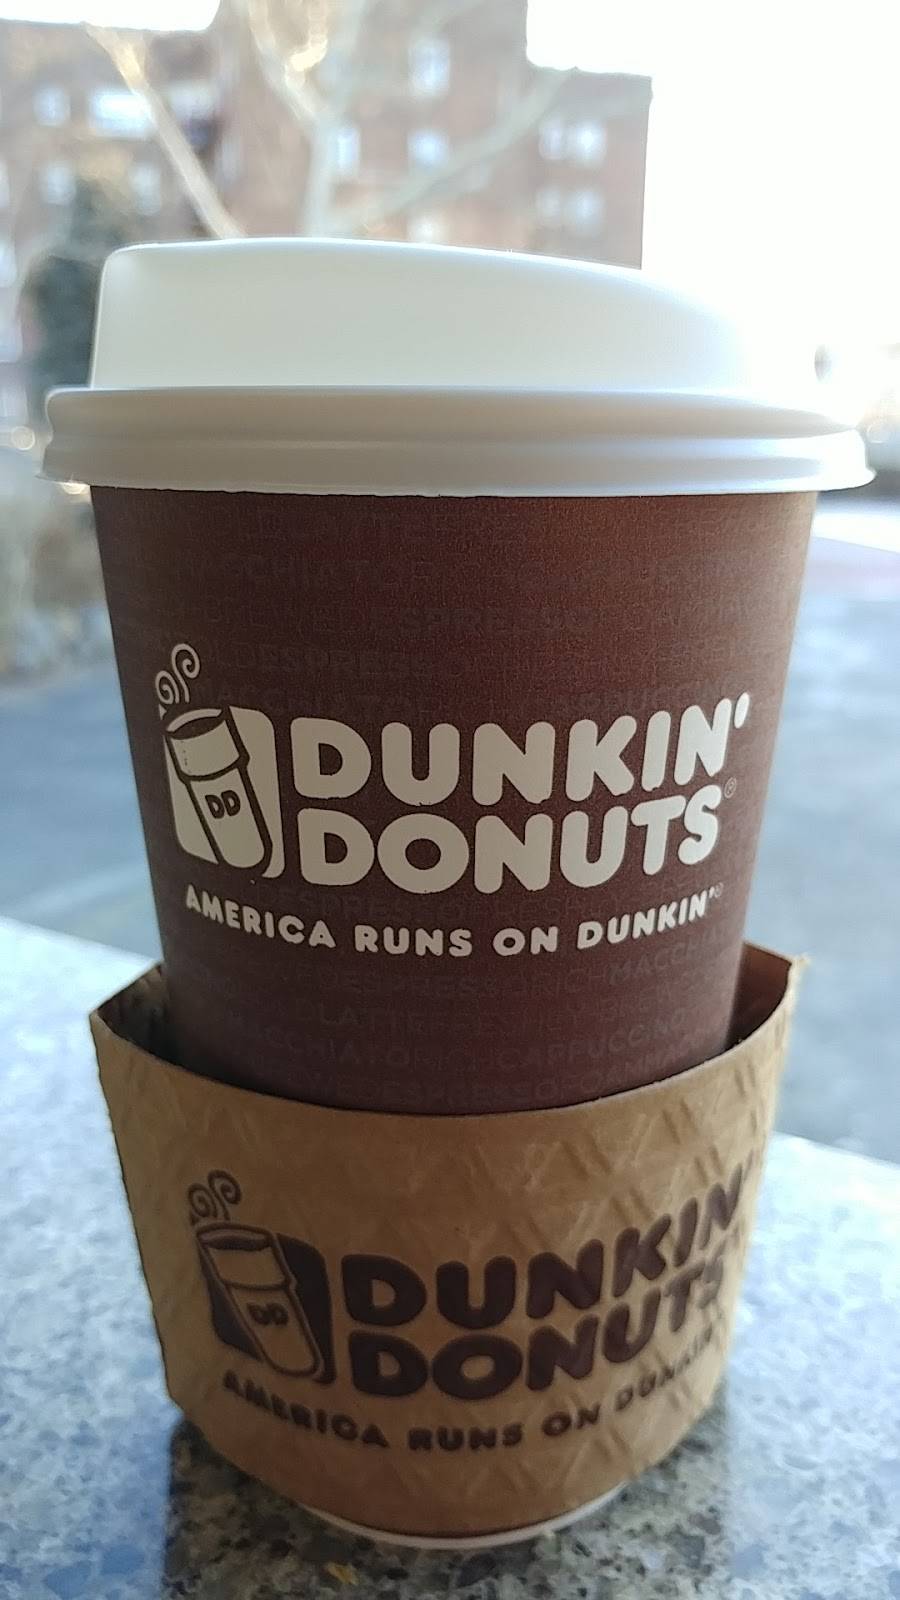 Dunkin Donuts | cafe | 7101 Boulevard E, Guttenberg, NJ 07093, USA | 2018687415 OR +1 201-868-7415